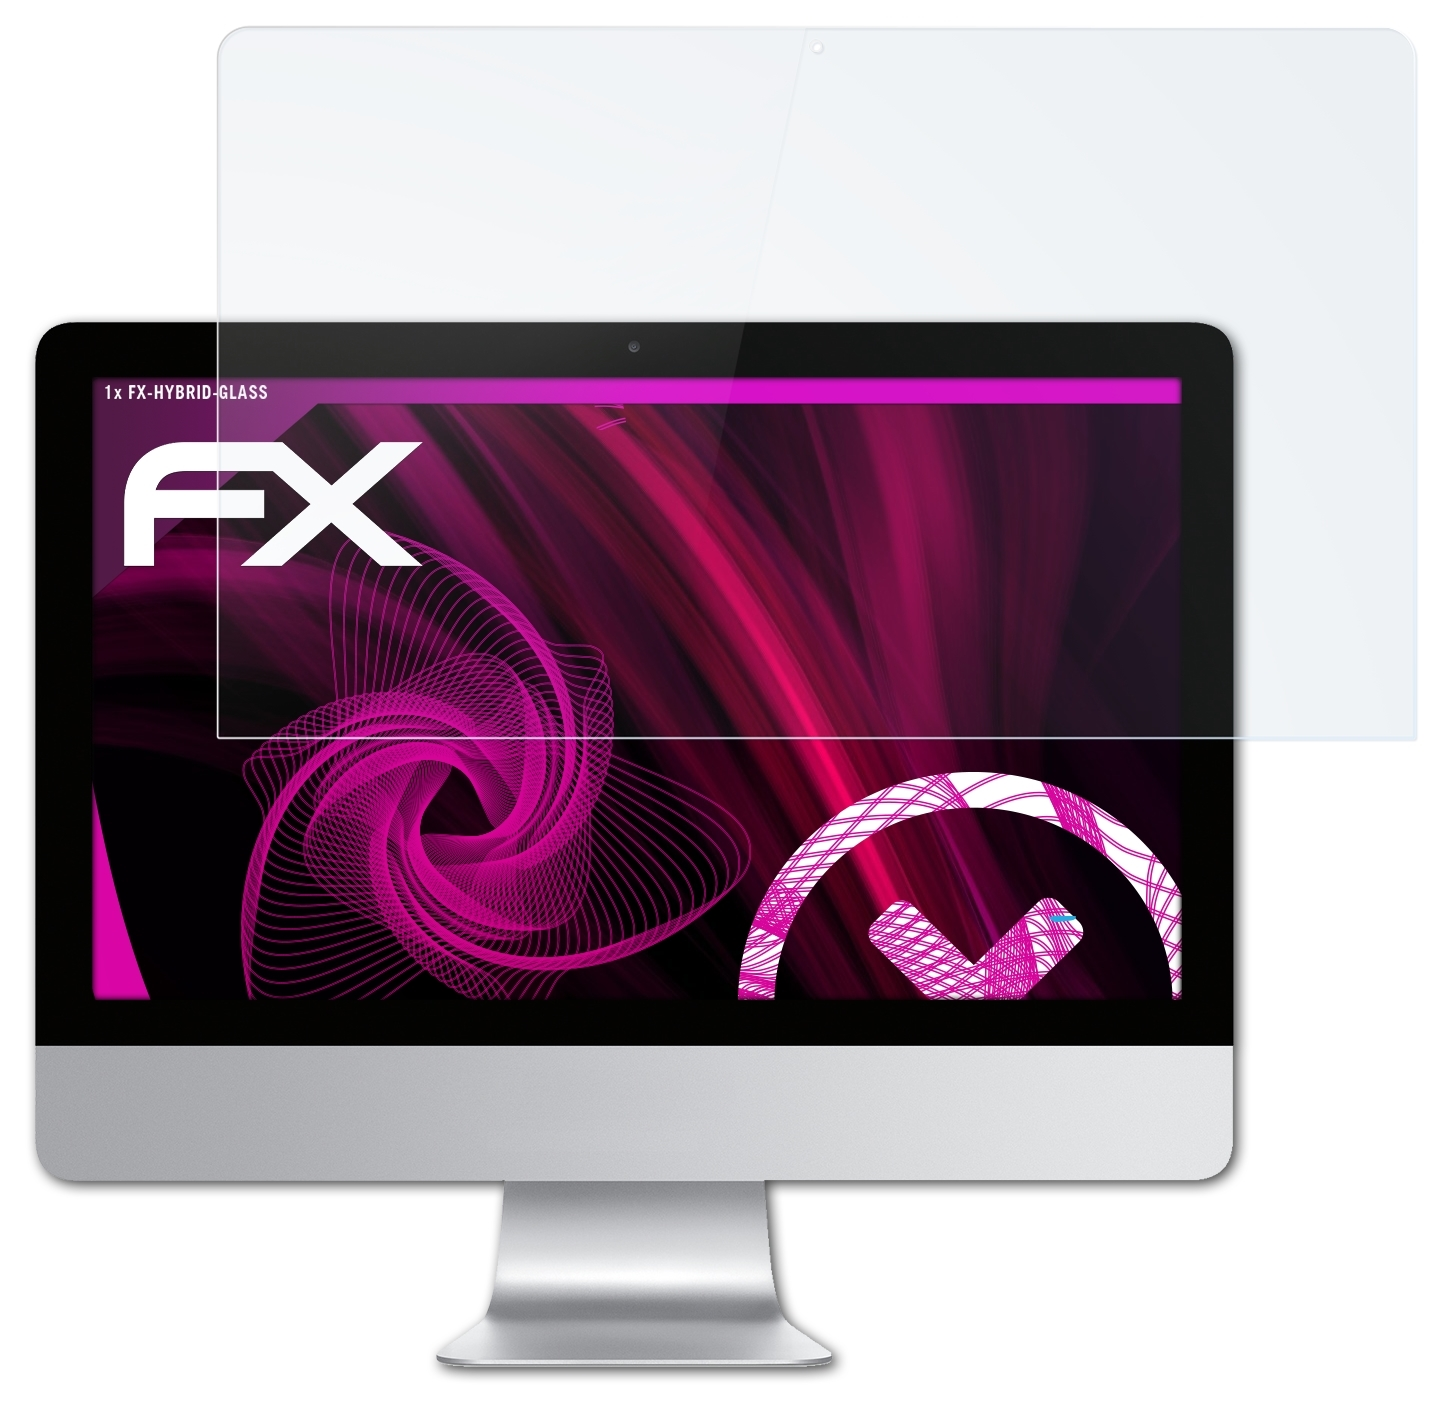 FX-Hybrid-Glass 21,5 2017) Model Apple ATFOLIX iMac Schutzglas(für